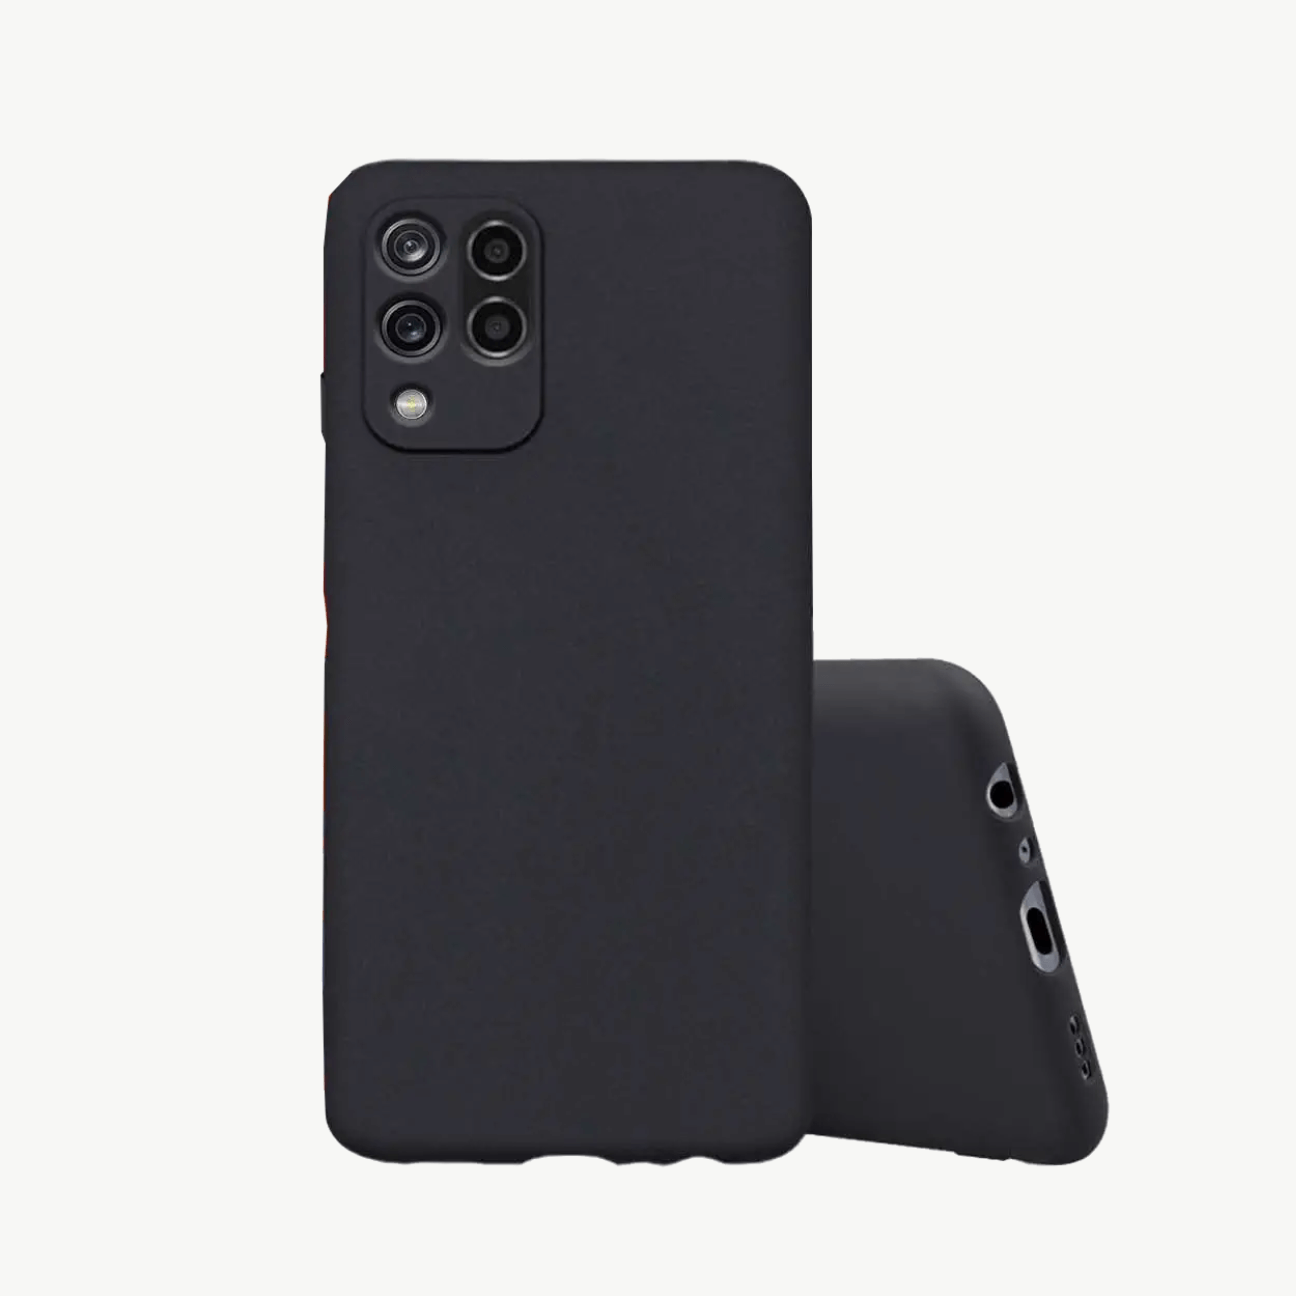 Oppo A71 (2018) Black Soft Silicone Phone Case